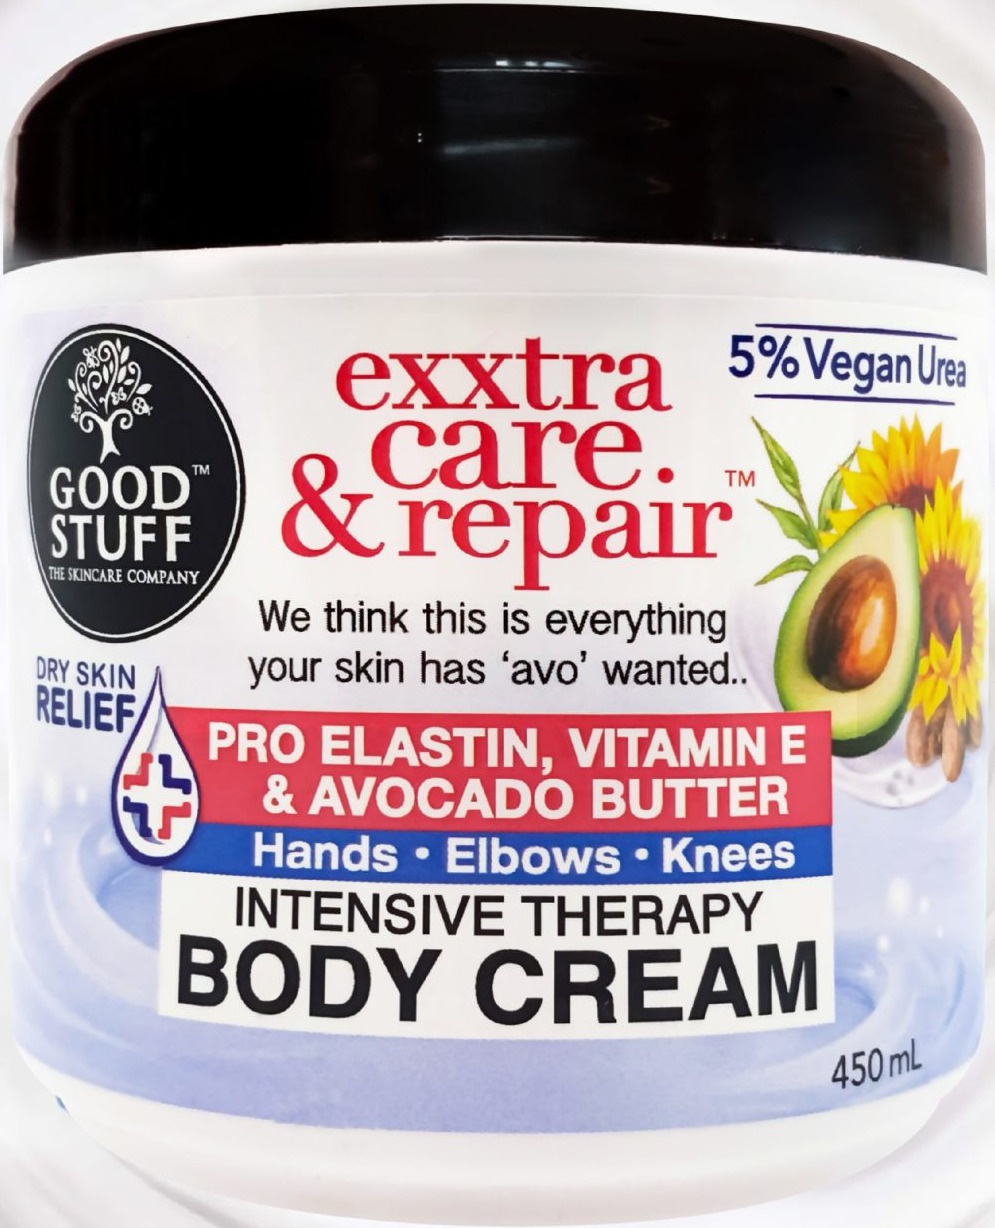 The Good Stuff Exxtra Care & Repair Body Cream